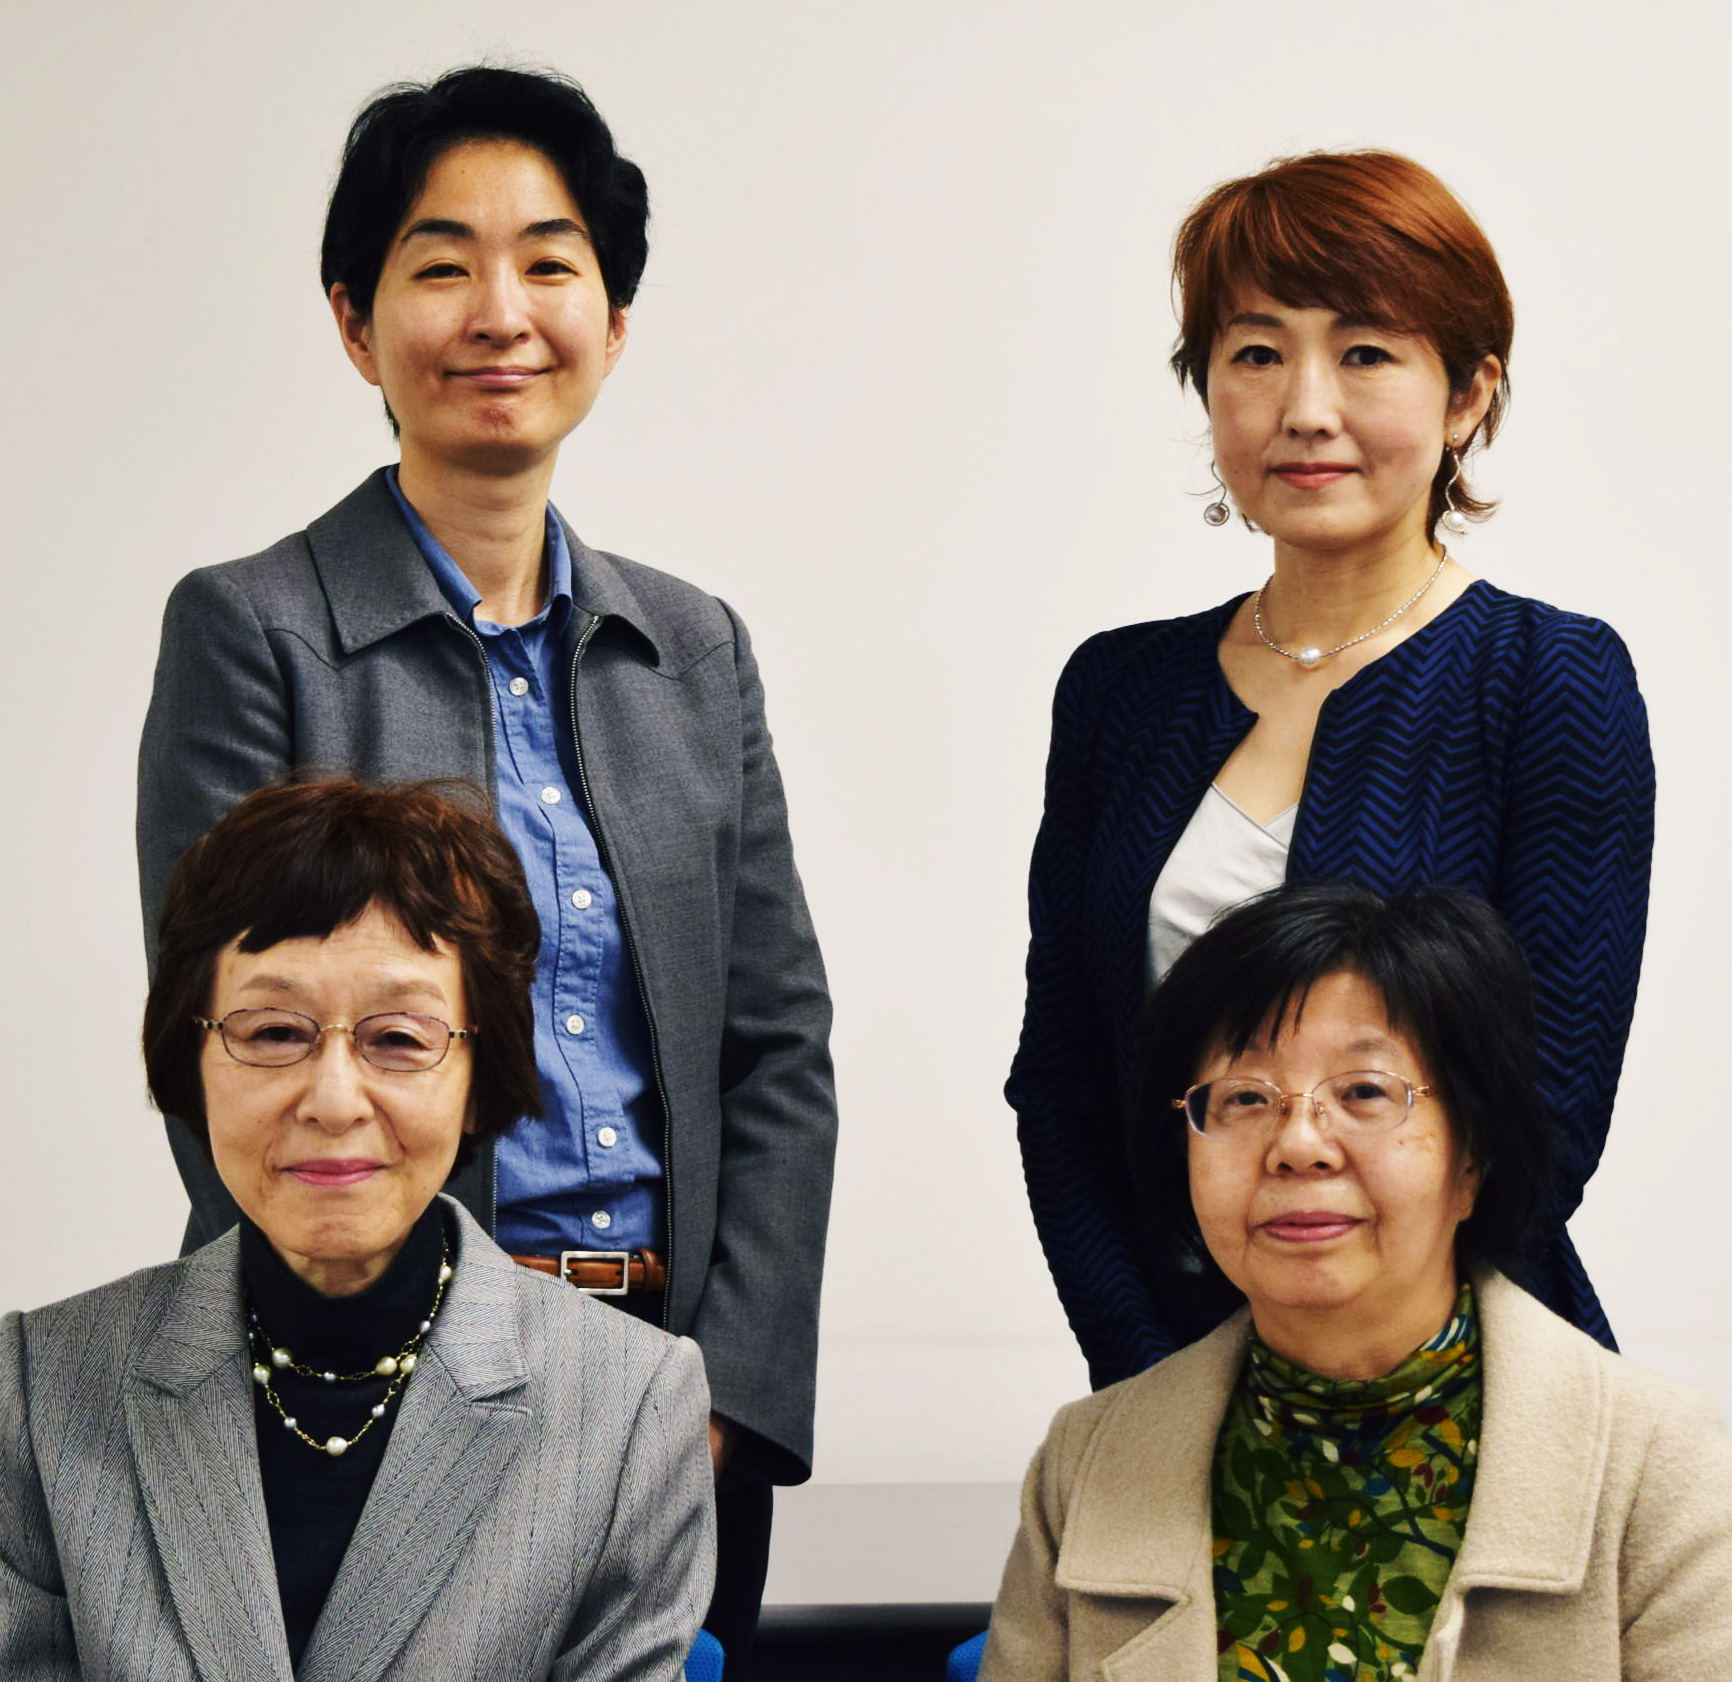 前列左から佐貫会長、犬伏副会長、後列左から川尻幹事、金野幹事